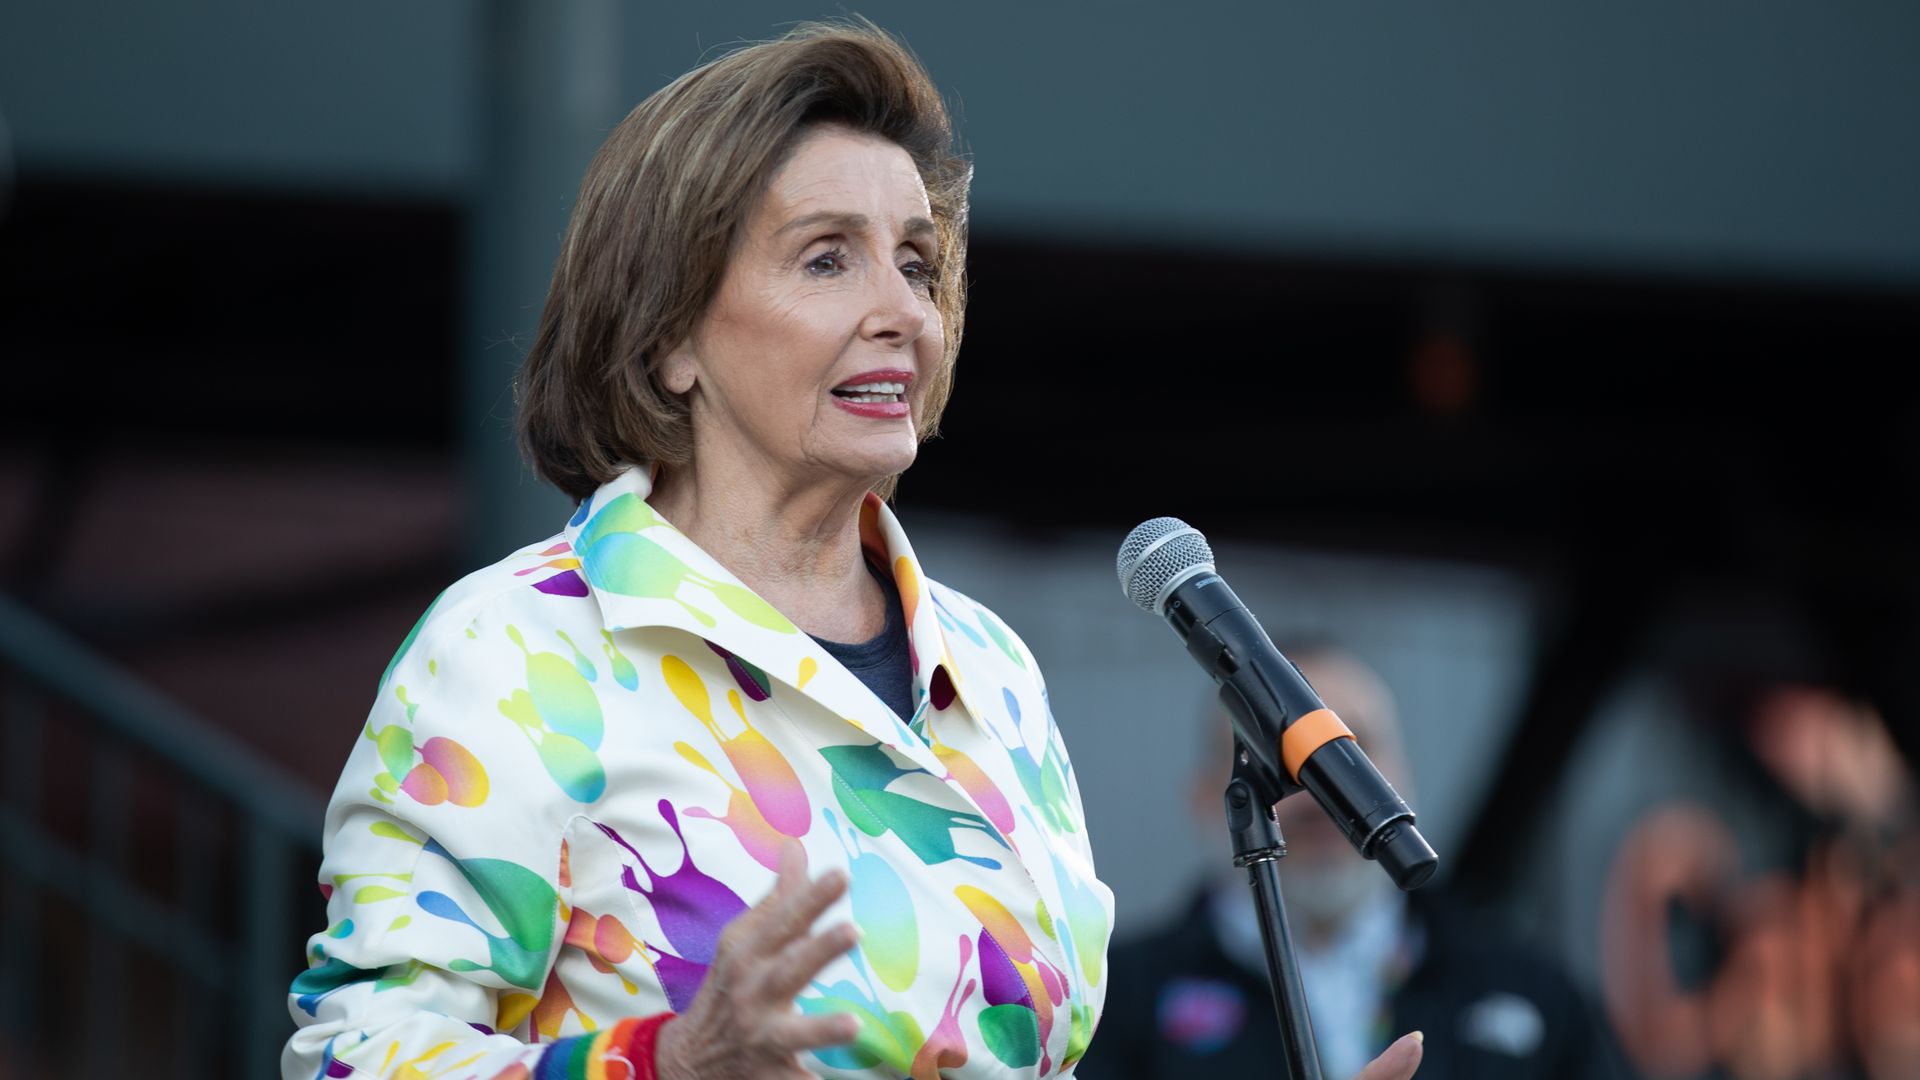 Nancy Pelosi tells of 'proud' record as speaker in likely final